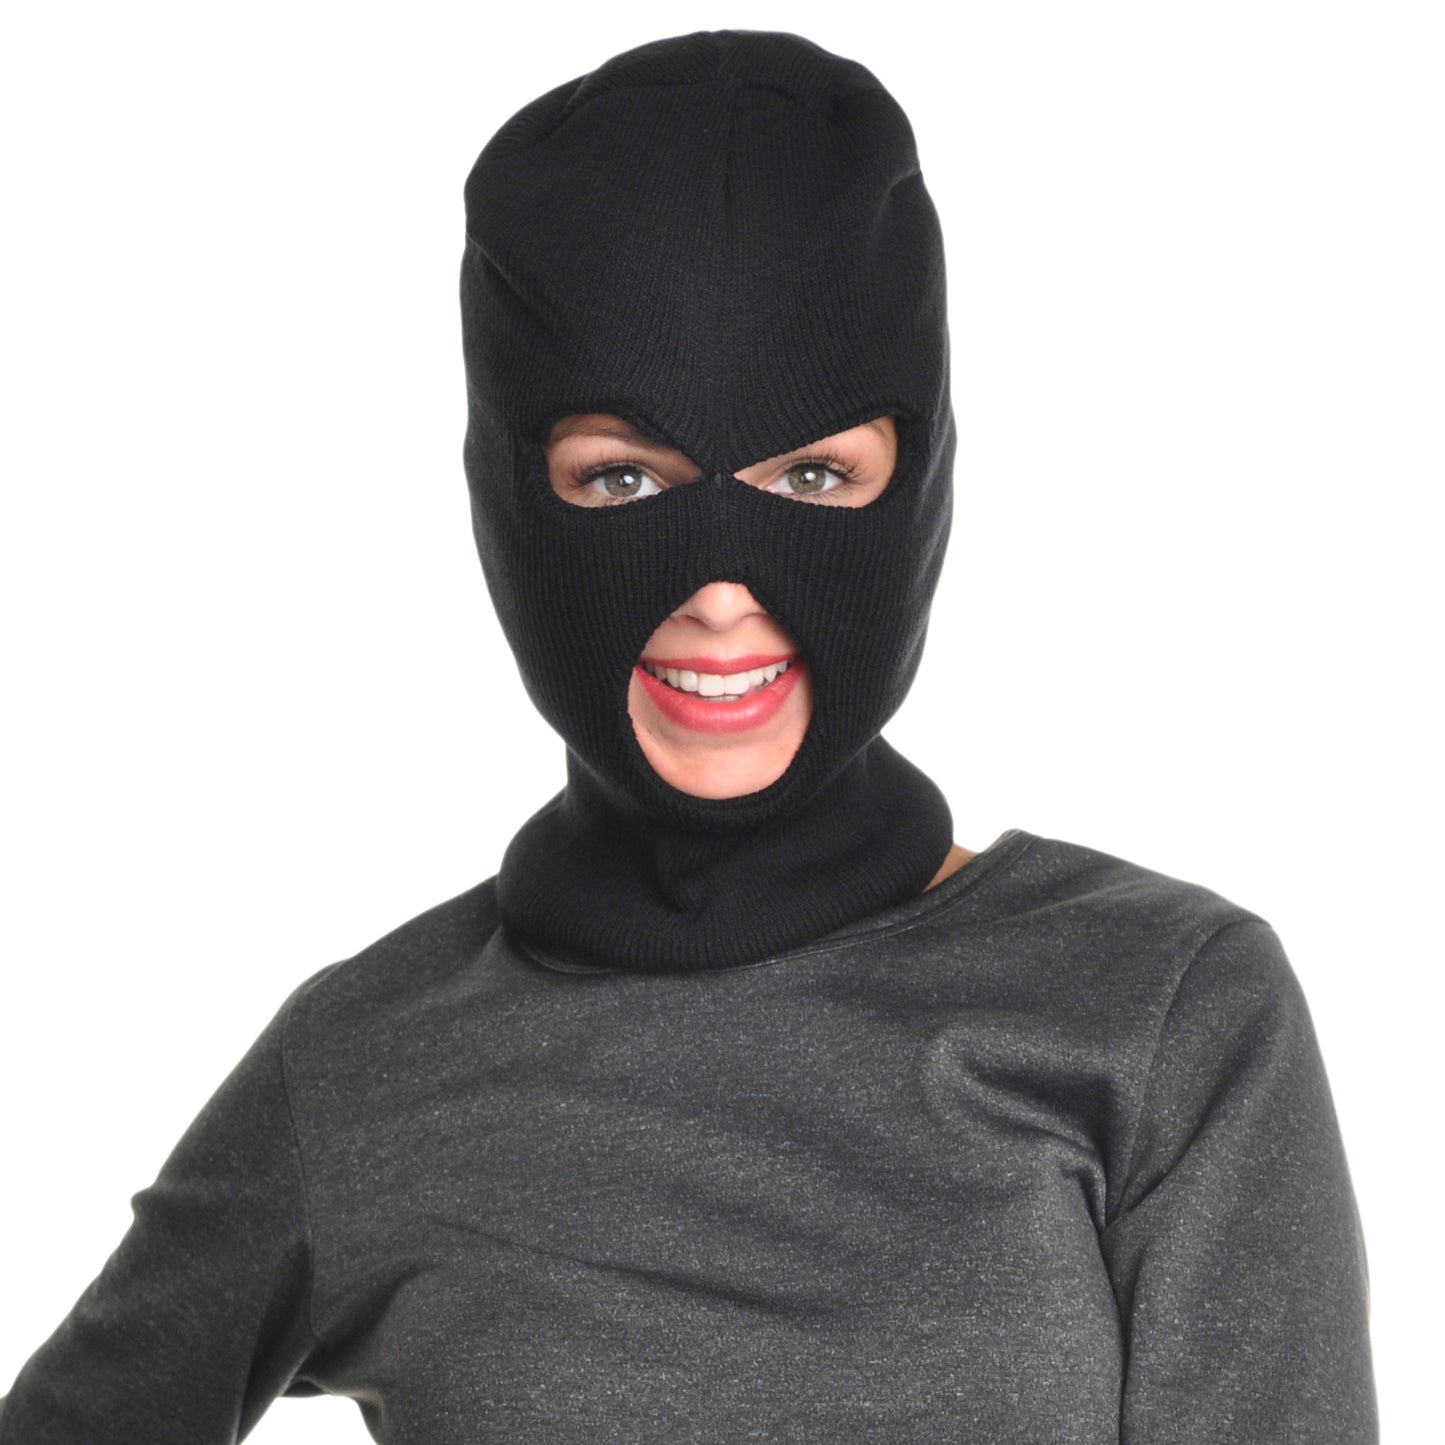 Angelina Winter Warmth Black Knitted Balaclava 3 Hole Ski Mask (12-Pack), #WH2040